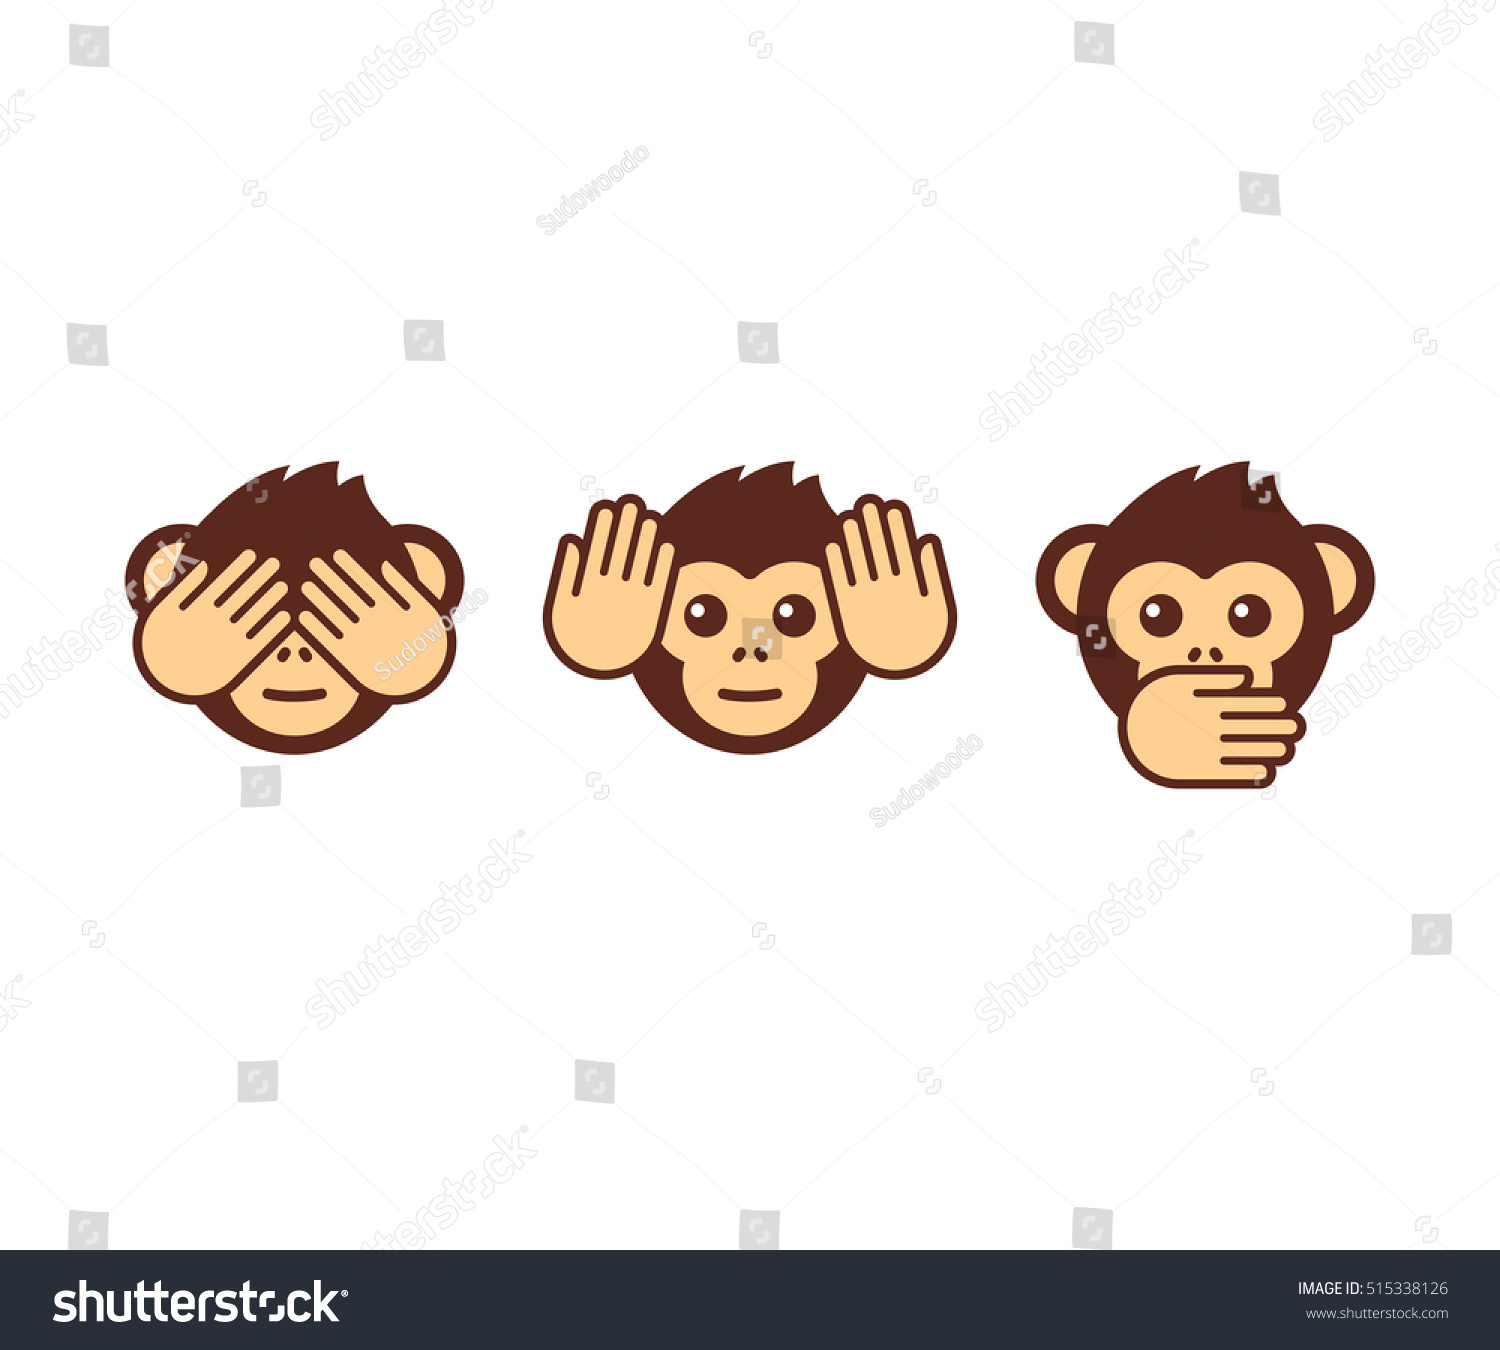 SVG of See no evil, hear no evil, speak no evil. Three wise monkeys vector icons. svg